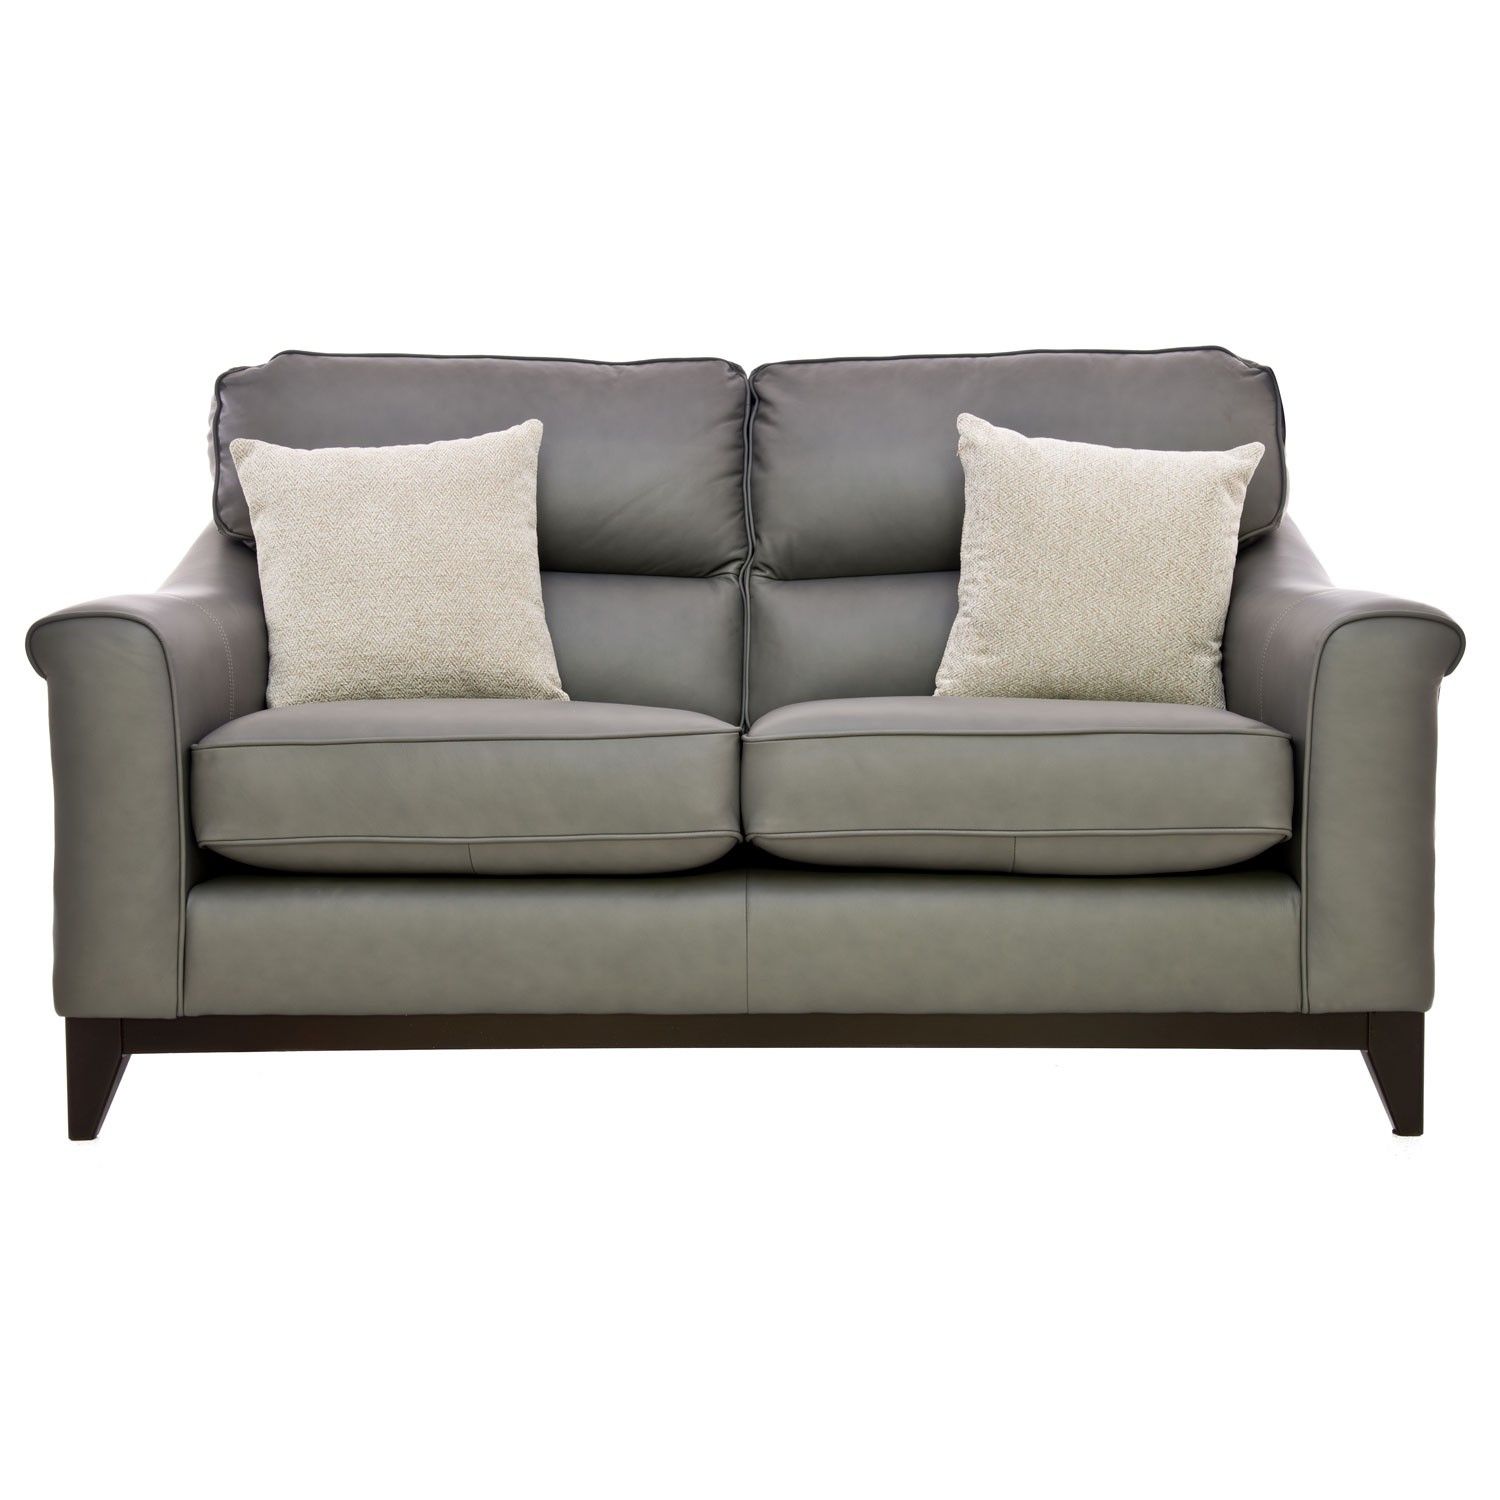 Parker Knoll Montana 2 Seater Leather Sofa | Leekes Pertaining To Montana Sofas (View 1 of 15)